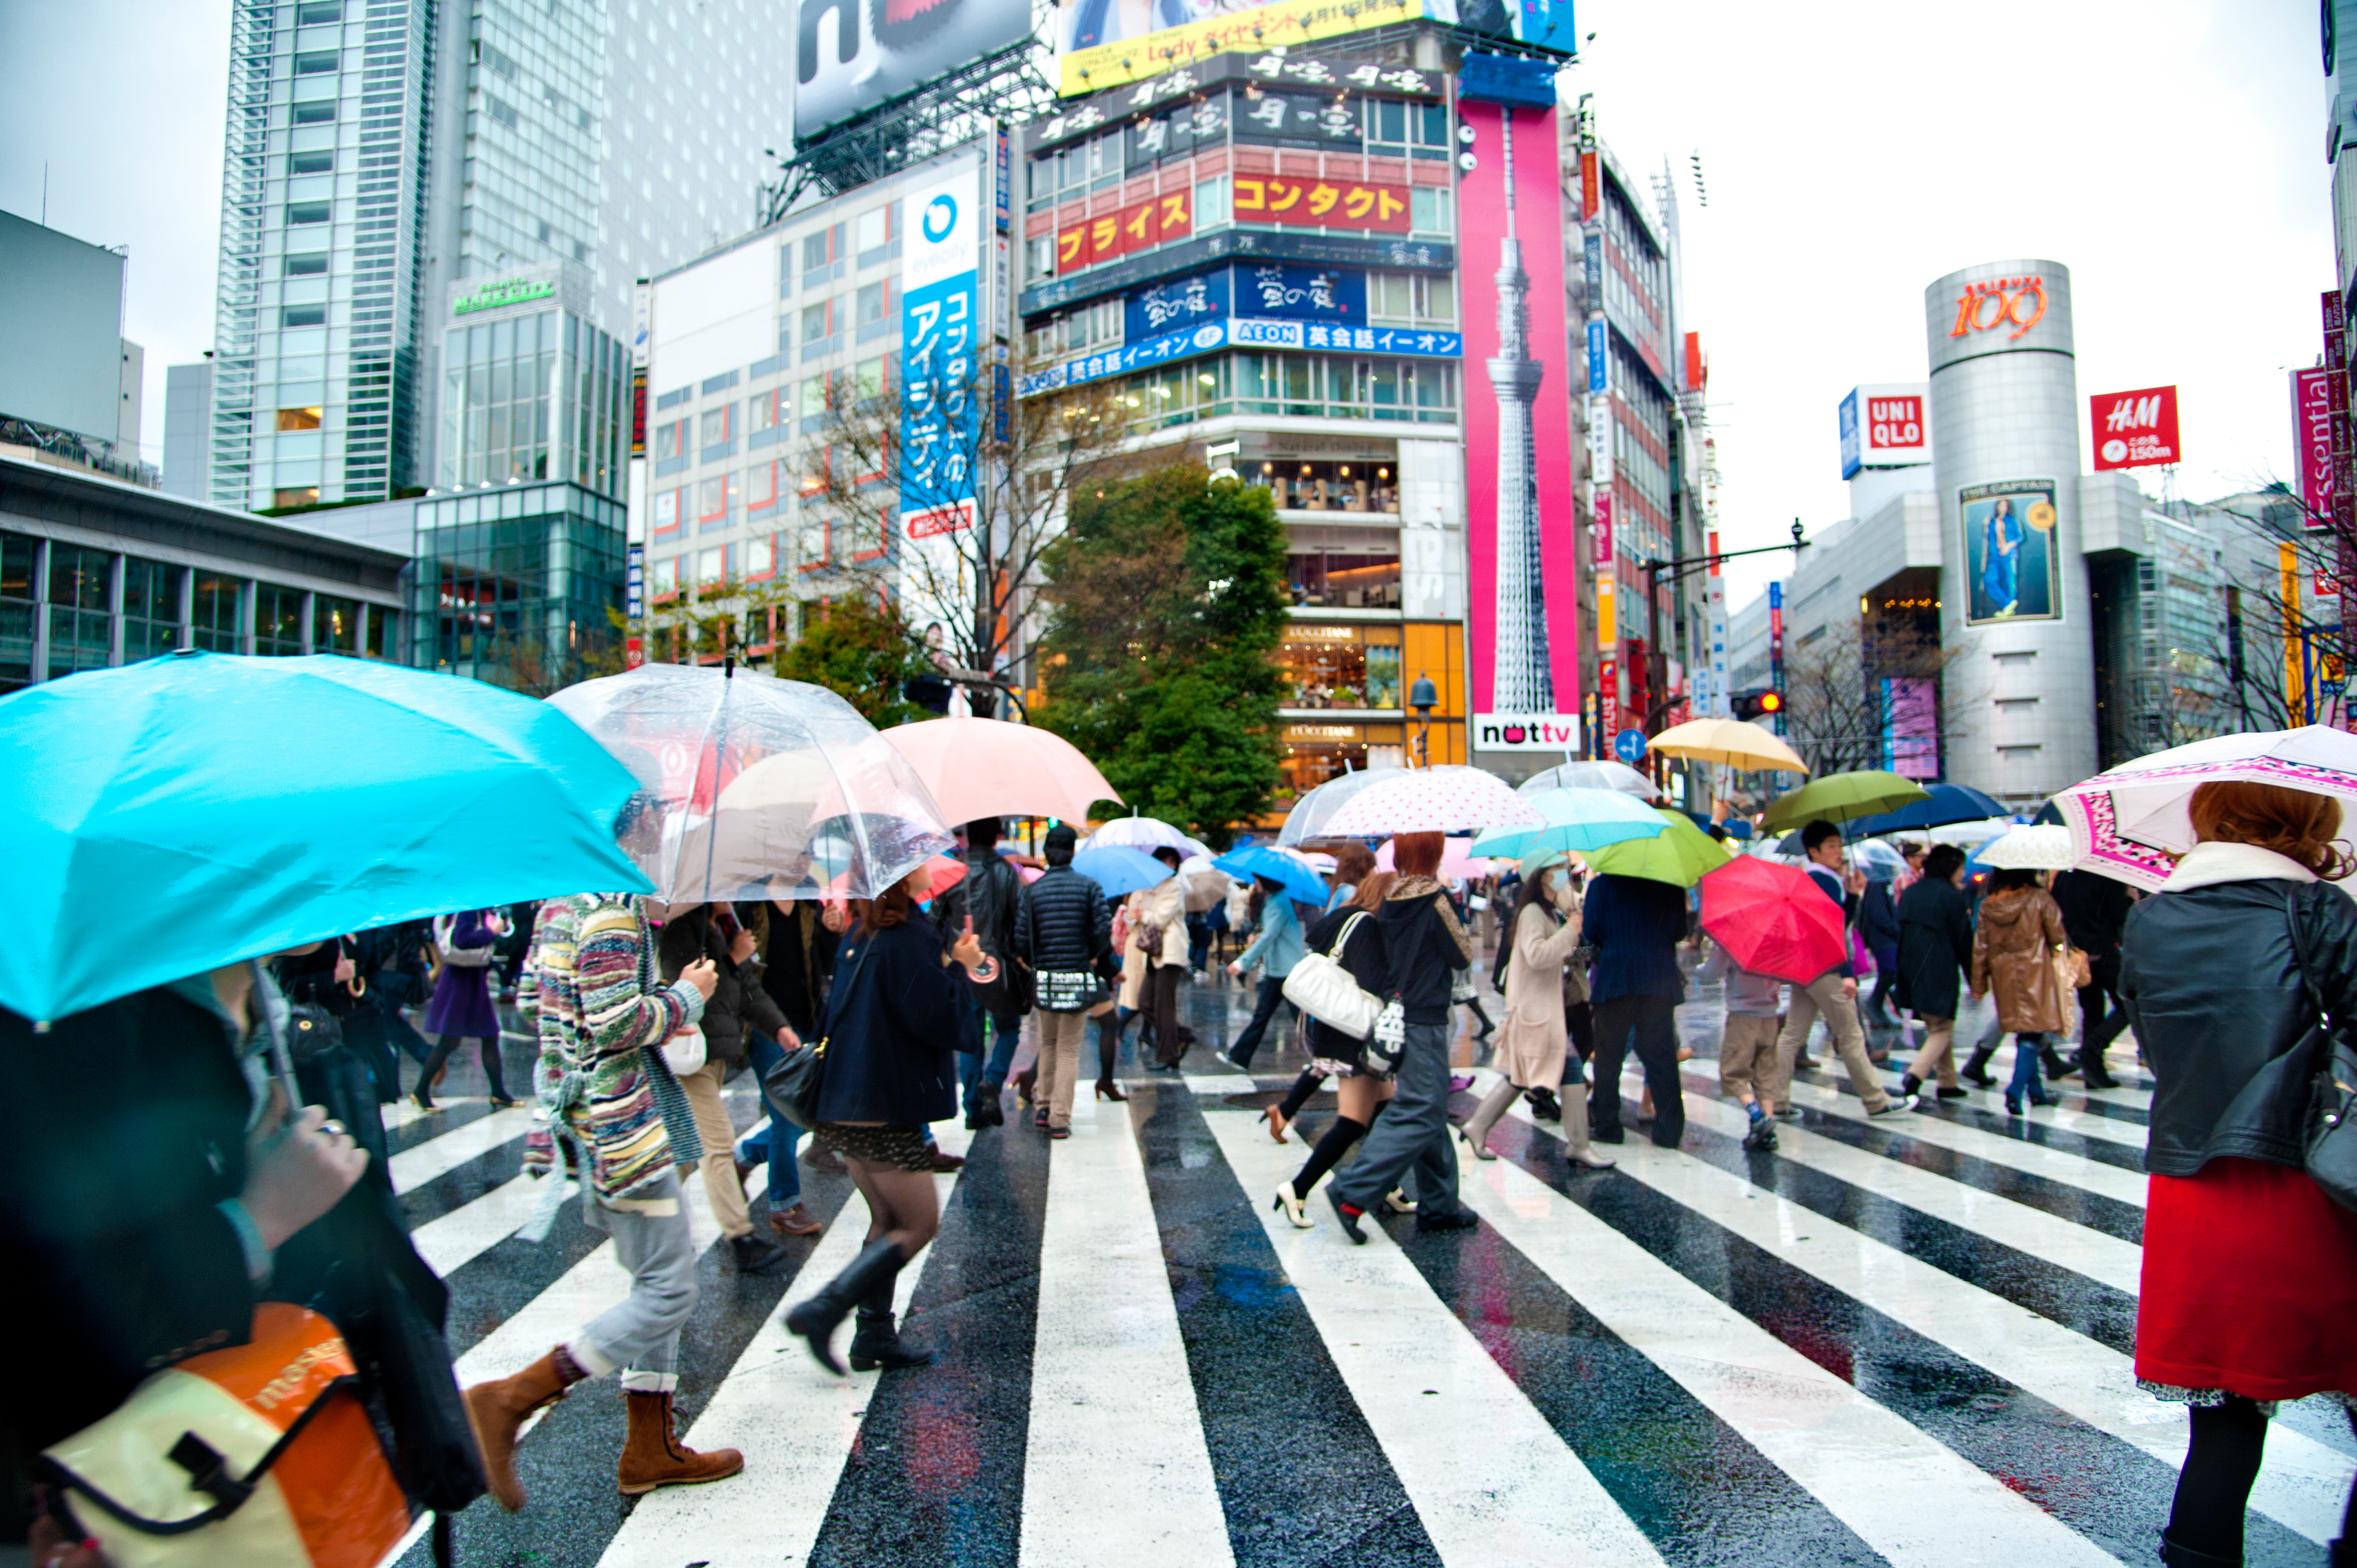 people crossing street in the rain